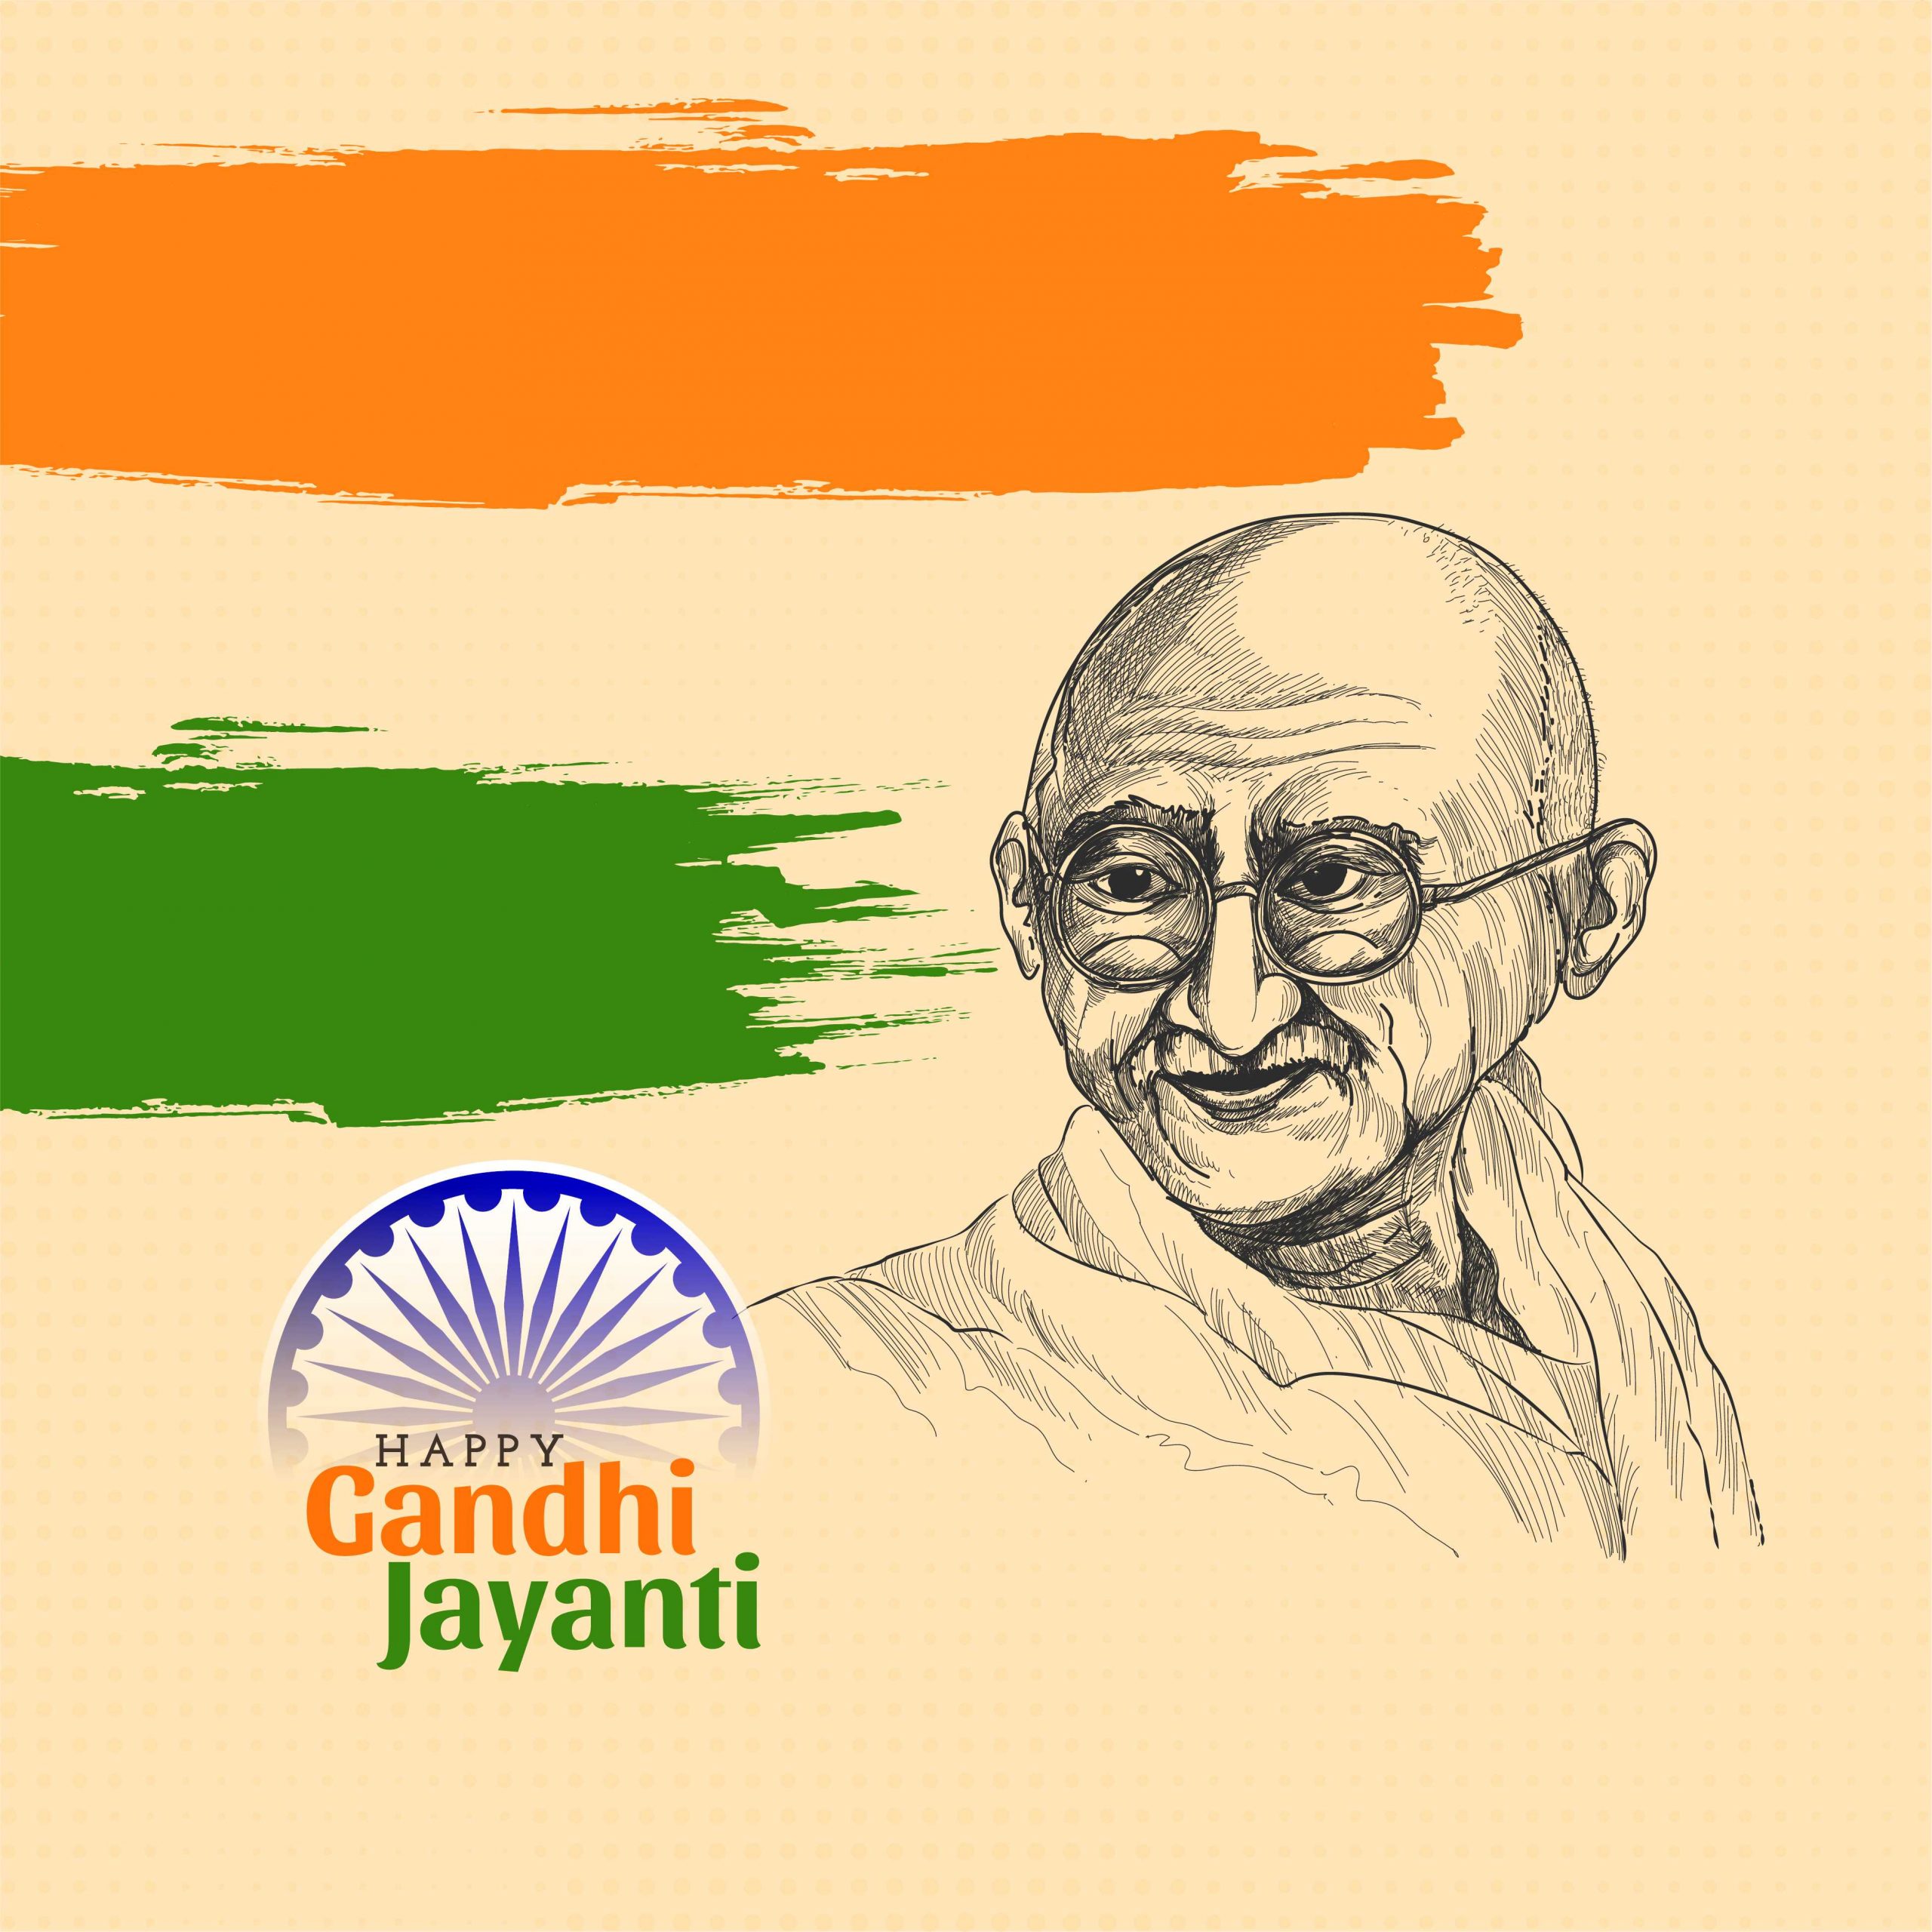 Happy Mahatma Gandhi Jayanti image download